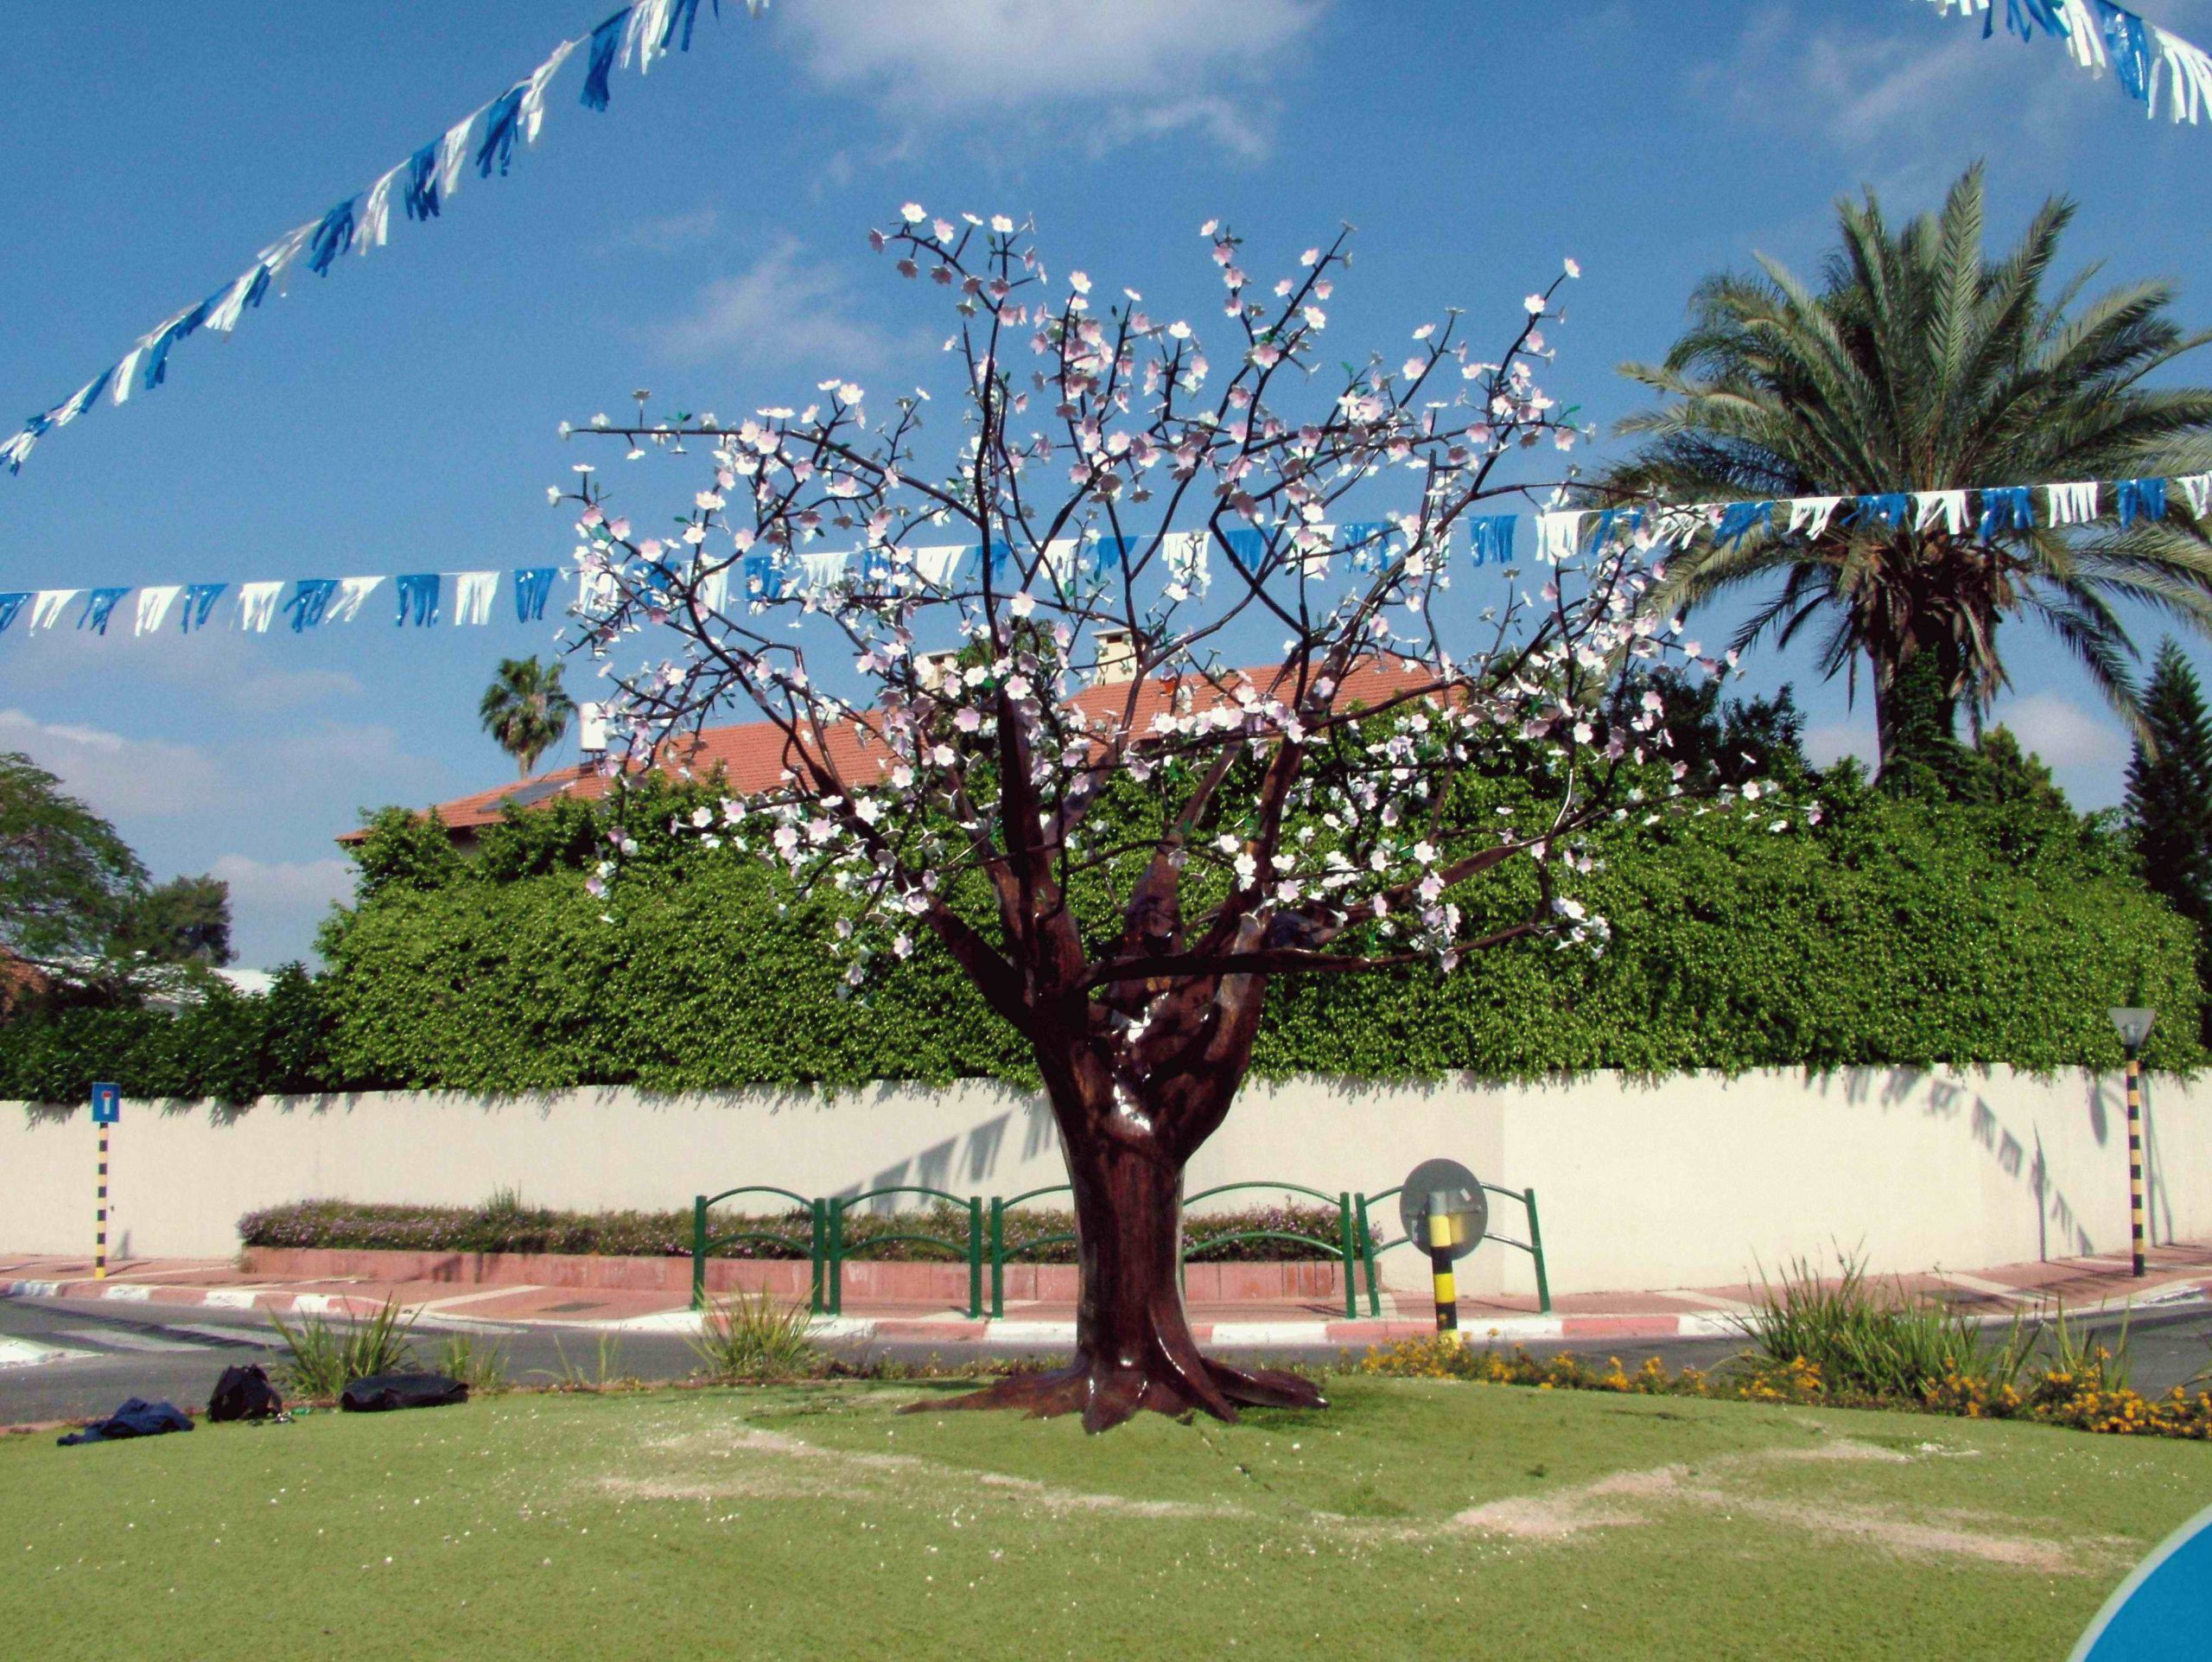 Almond tree sculpture, Nes Ziona